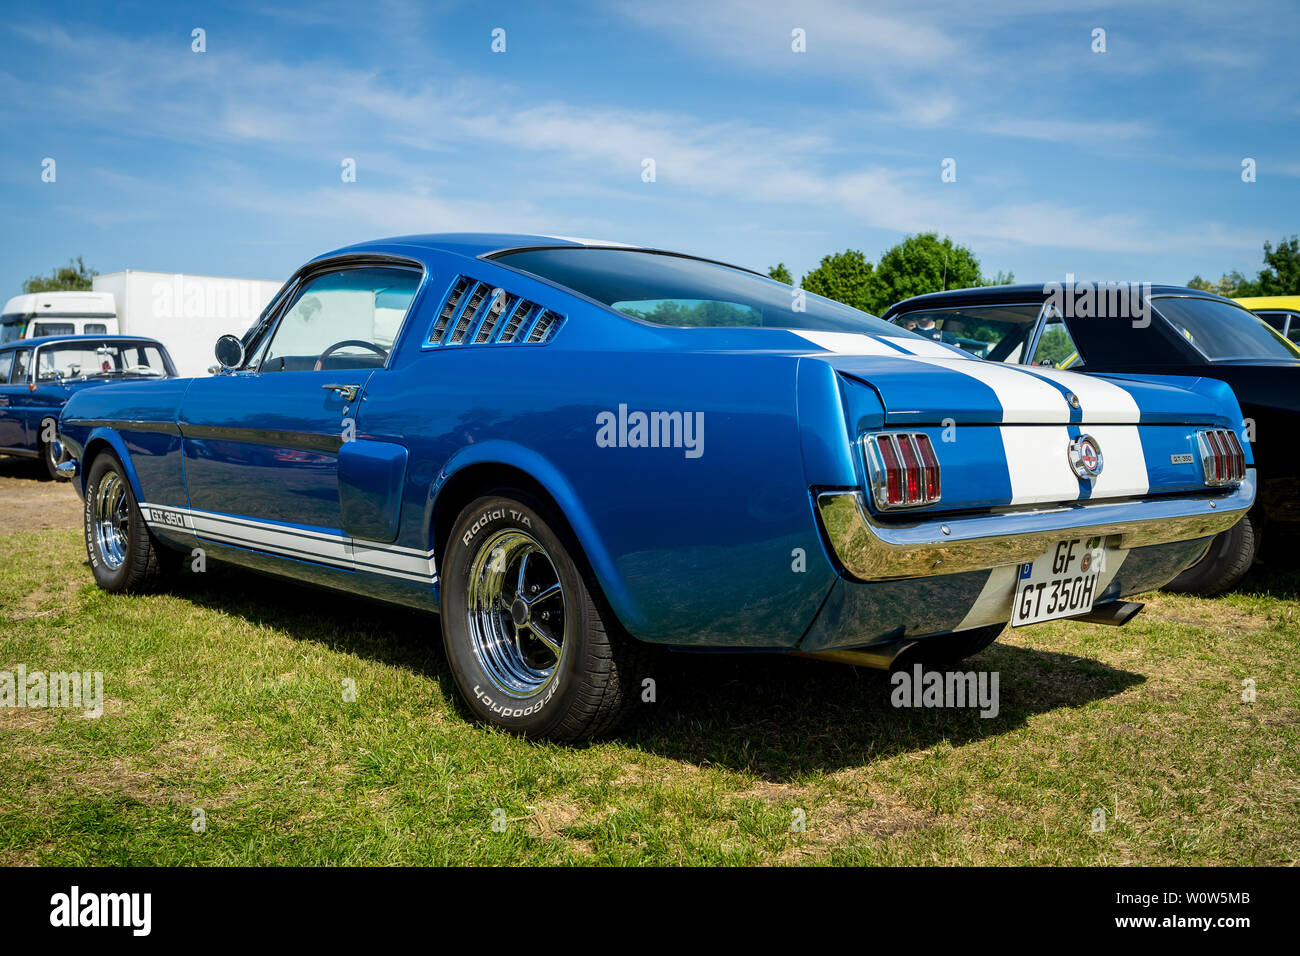 Rear View Ford Mustang Shelby Stockfotos Und Bilder Kaufen Alamy